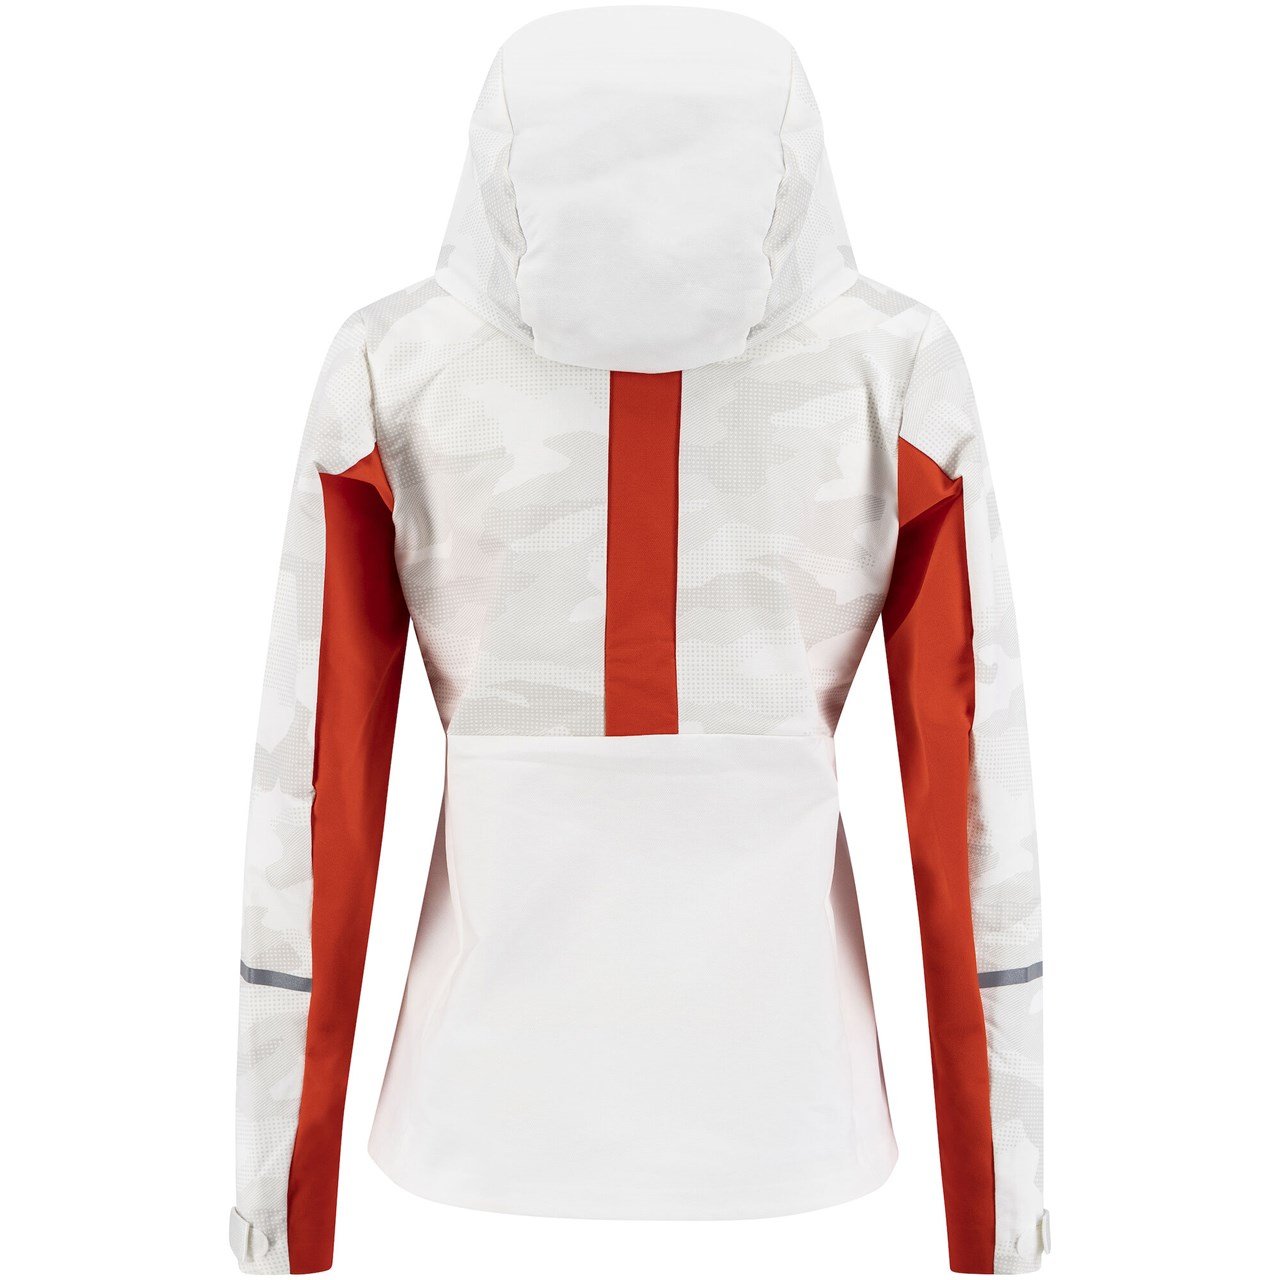 Surmount - Women's Soft Shield Jacket